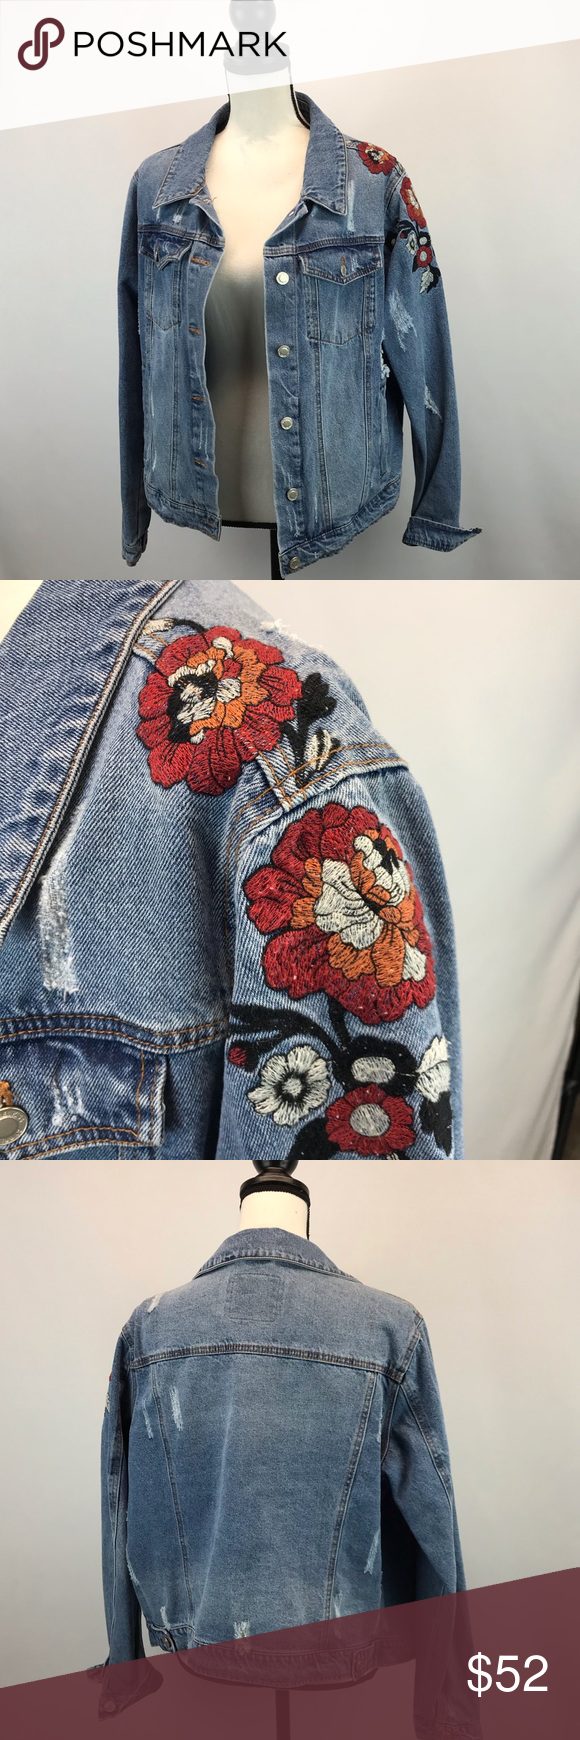 Distressed Embroidered Denim Jacket Distressed denim jacket embroidered with flo…